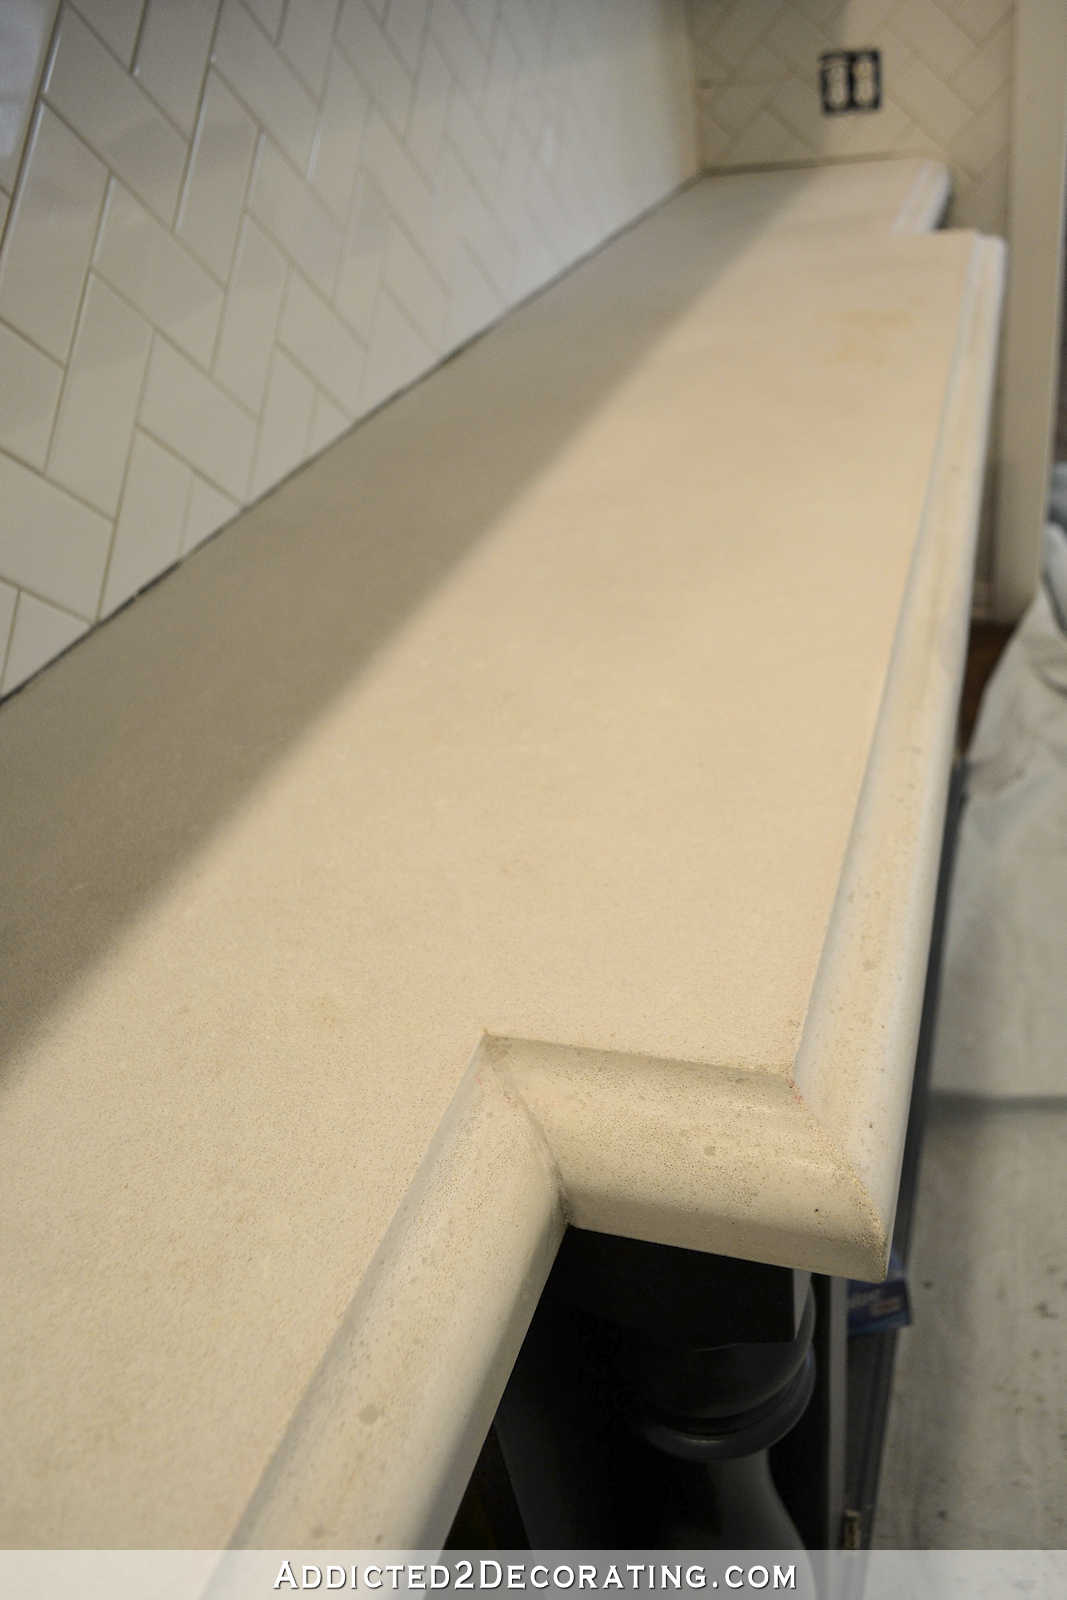 refinishing concrete countertops - 8 - concrete countertops after grinding and sanding - countertop on back wall